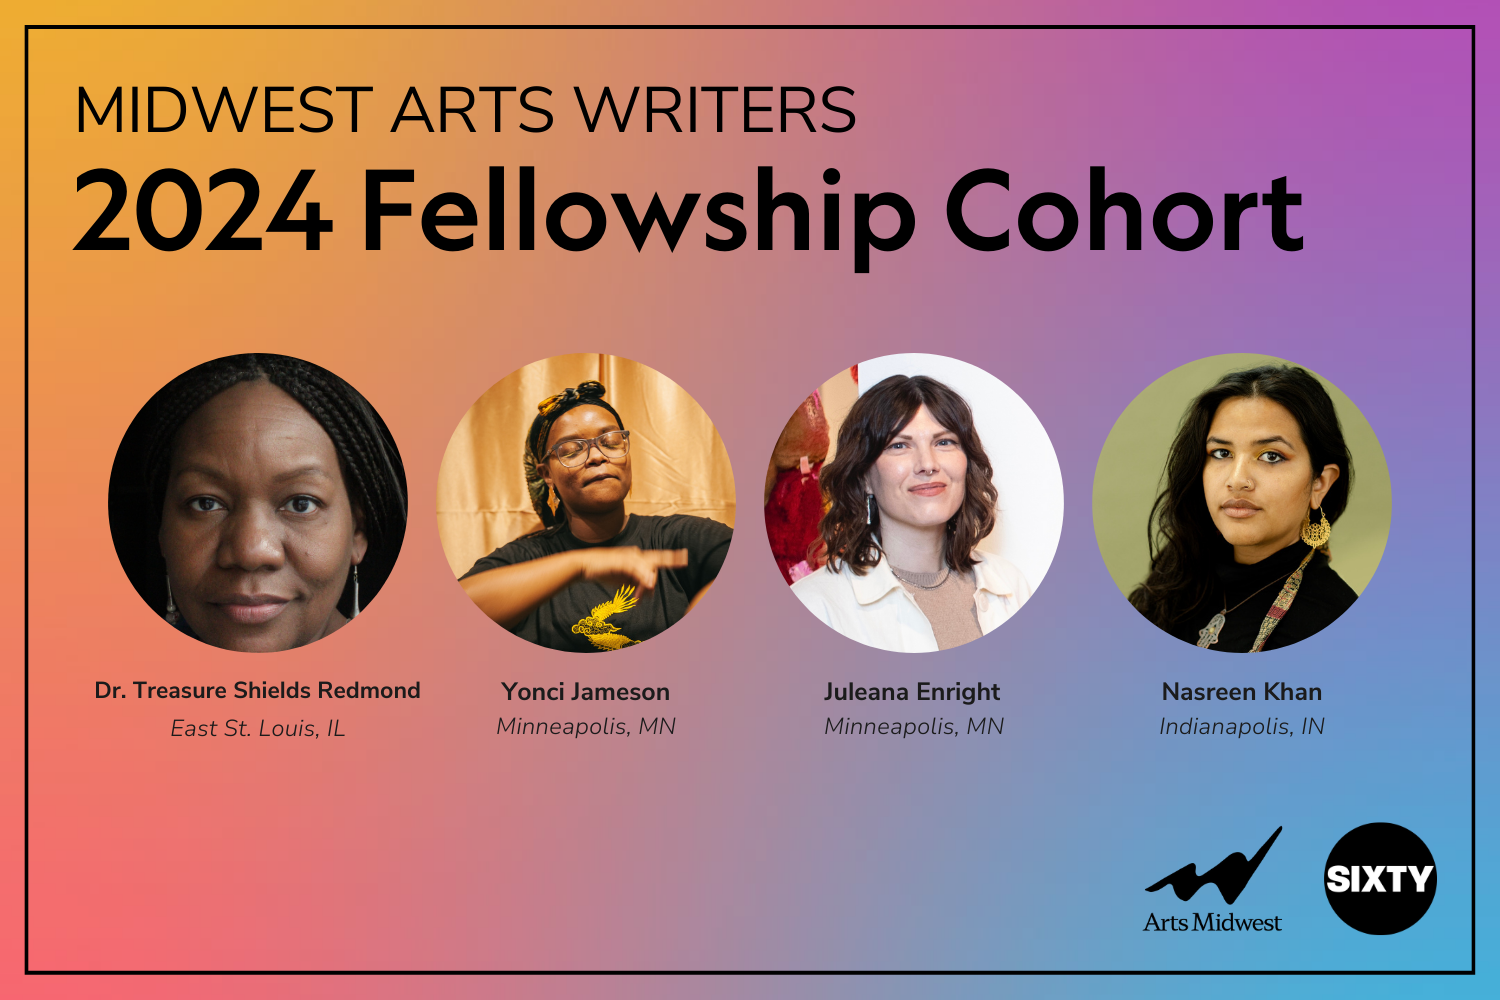 Meet Sixty’s Midwest Arts Writers Fellowship Cohort!